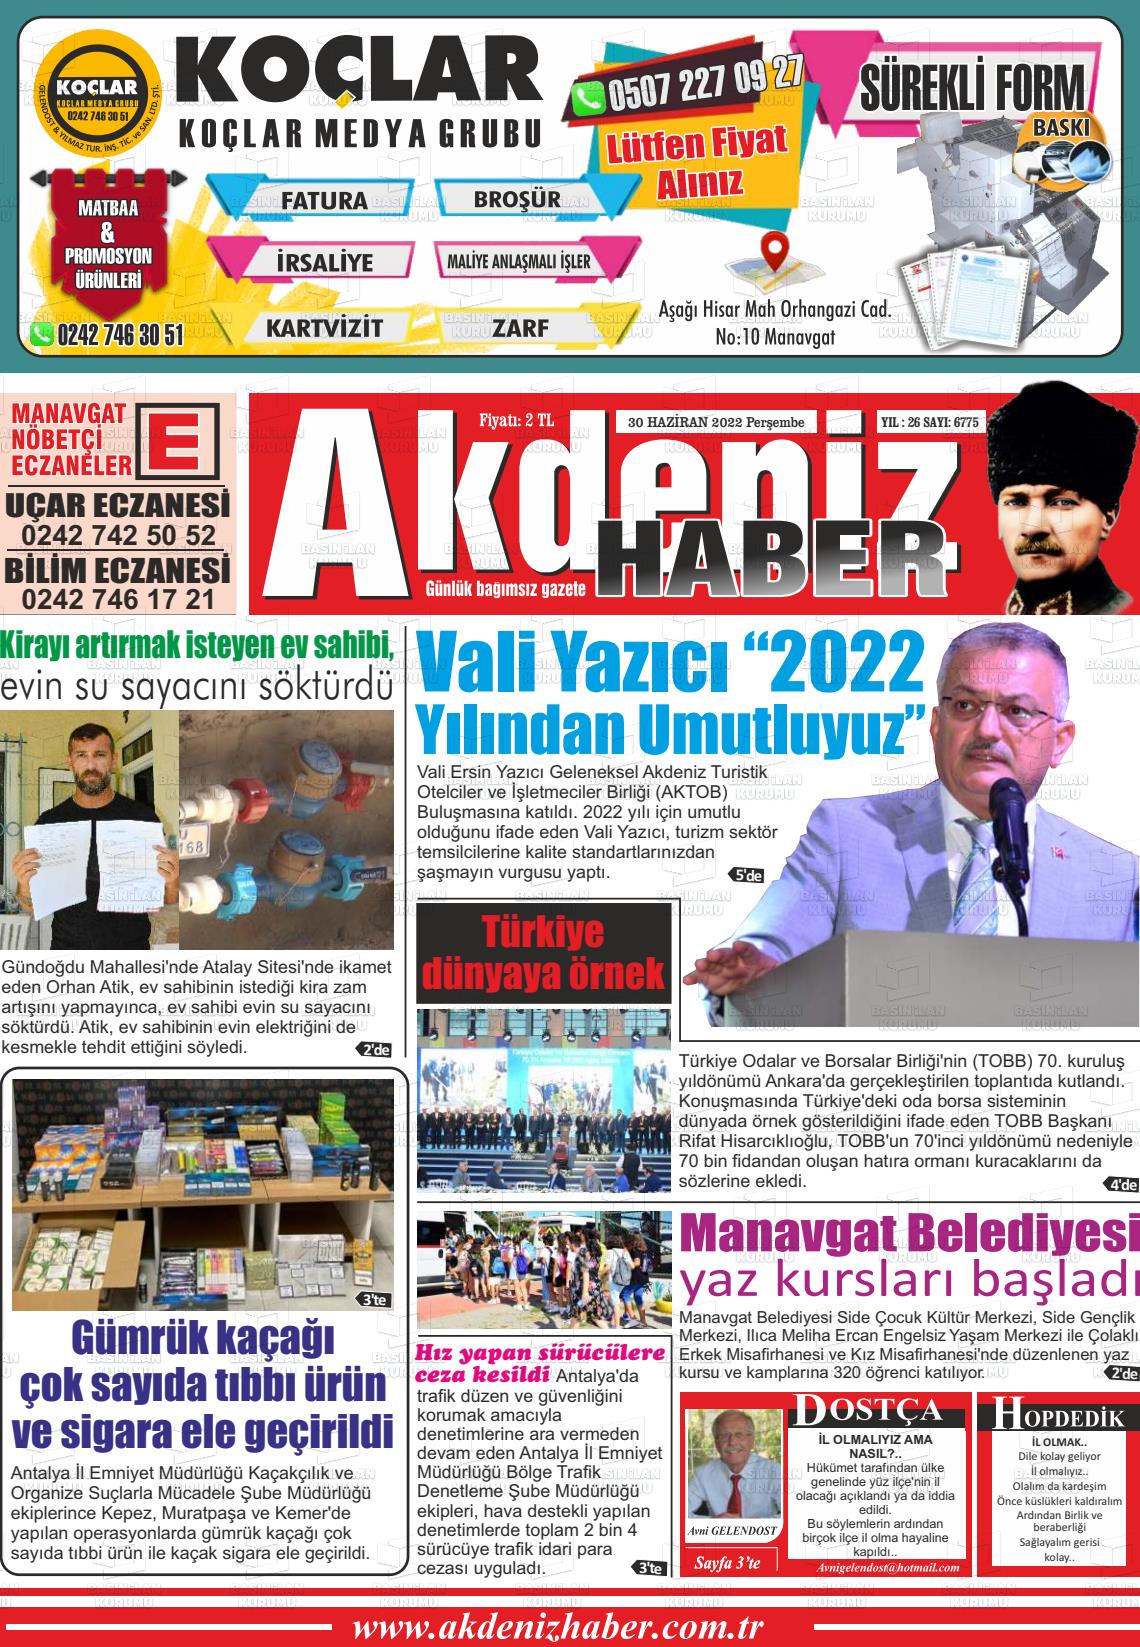 02 Temmuz 2022 Akdeniz Haber Gazete Manşeti